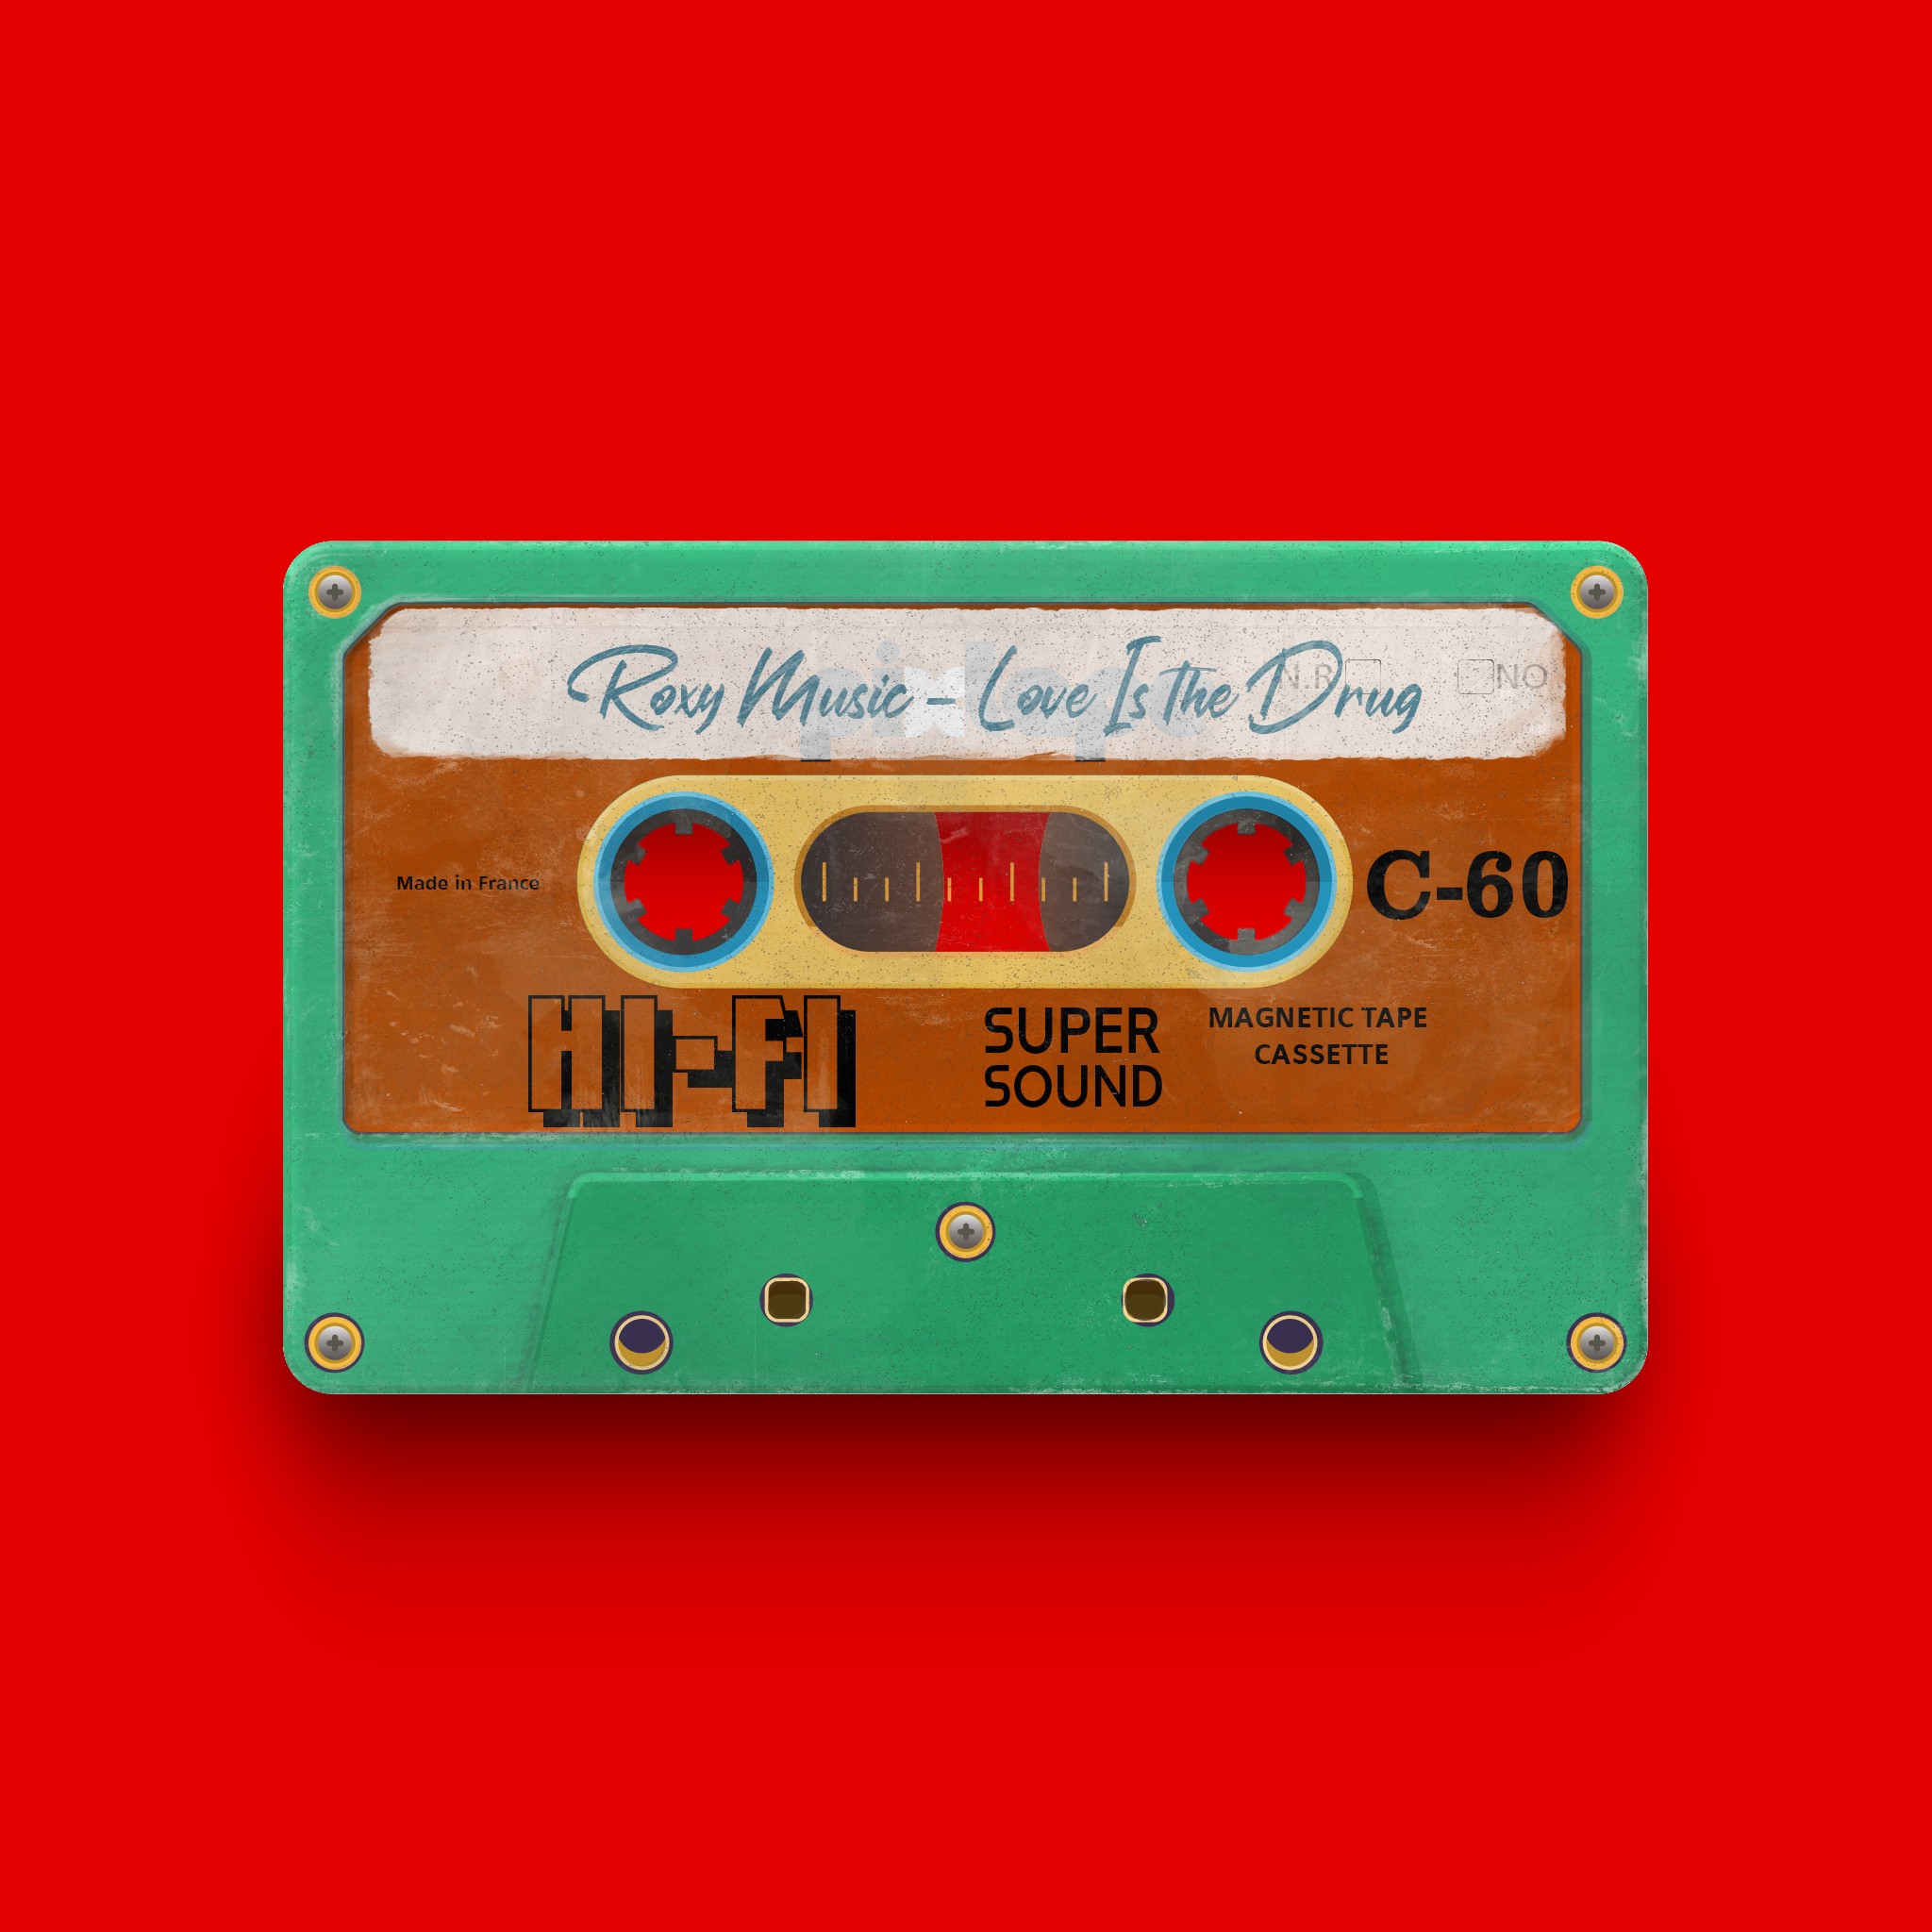 PixTape #78 | Roxy Music - Love Is the Drug